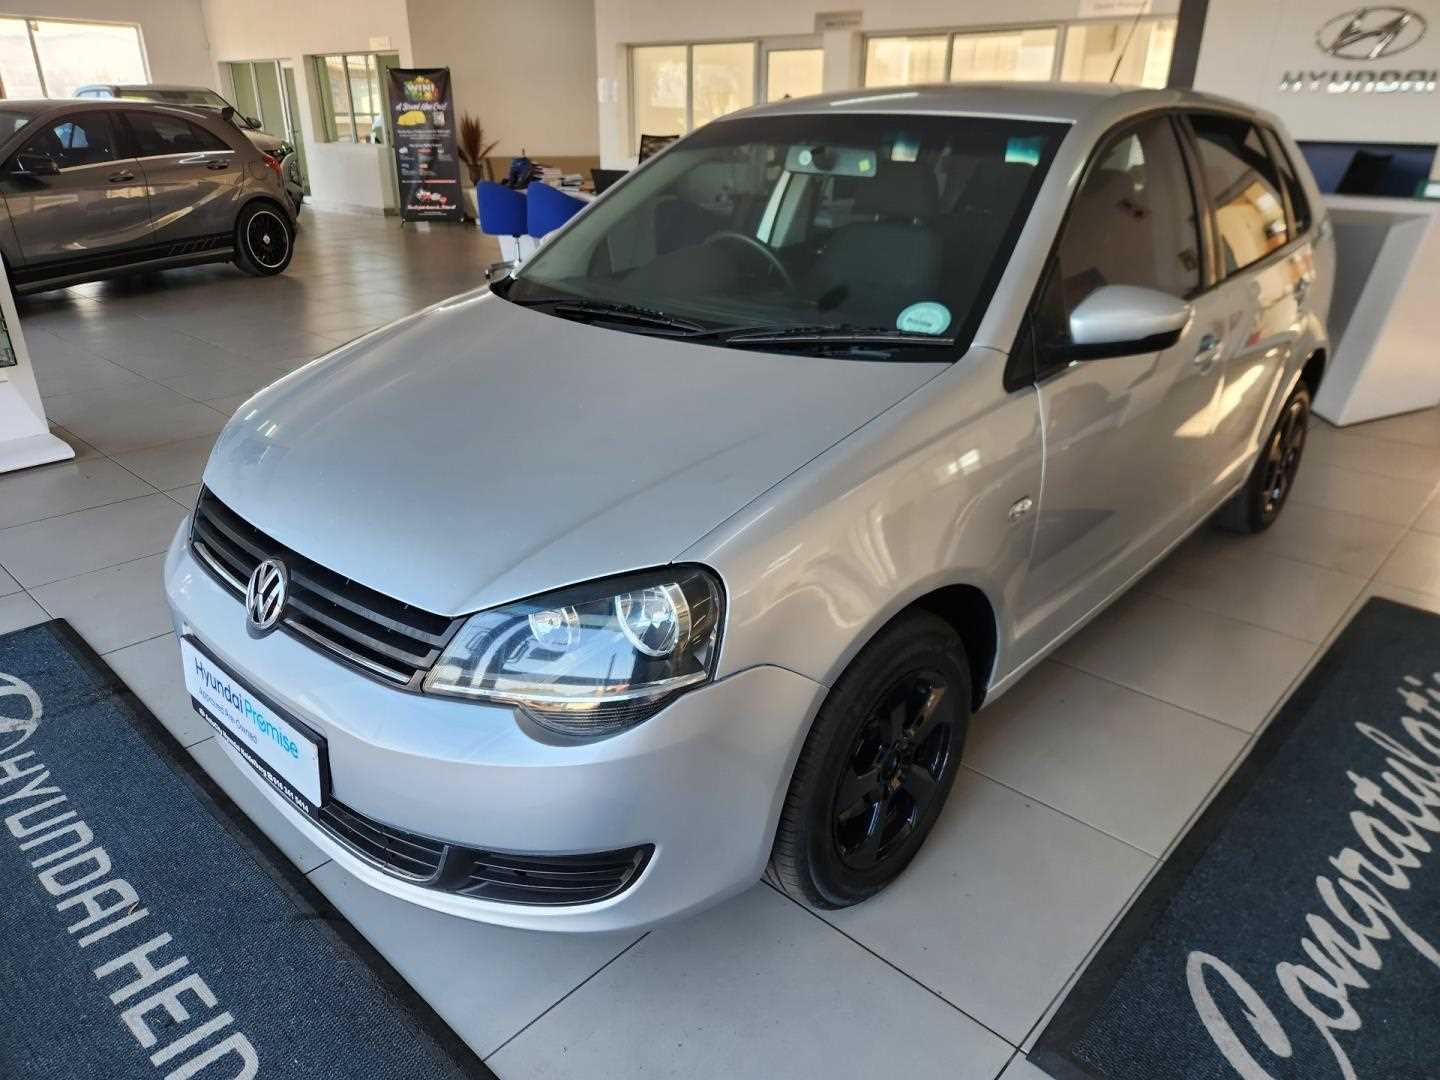 Volkswagen POLO VIVO GP 1.4 TRENDLINE 5DR for Sale in South Africa